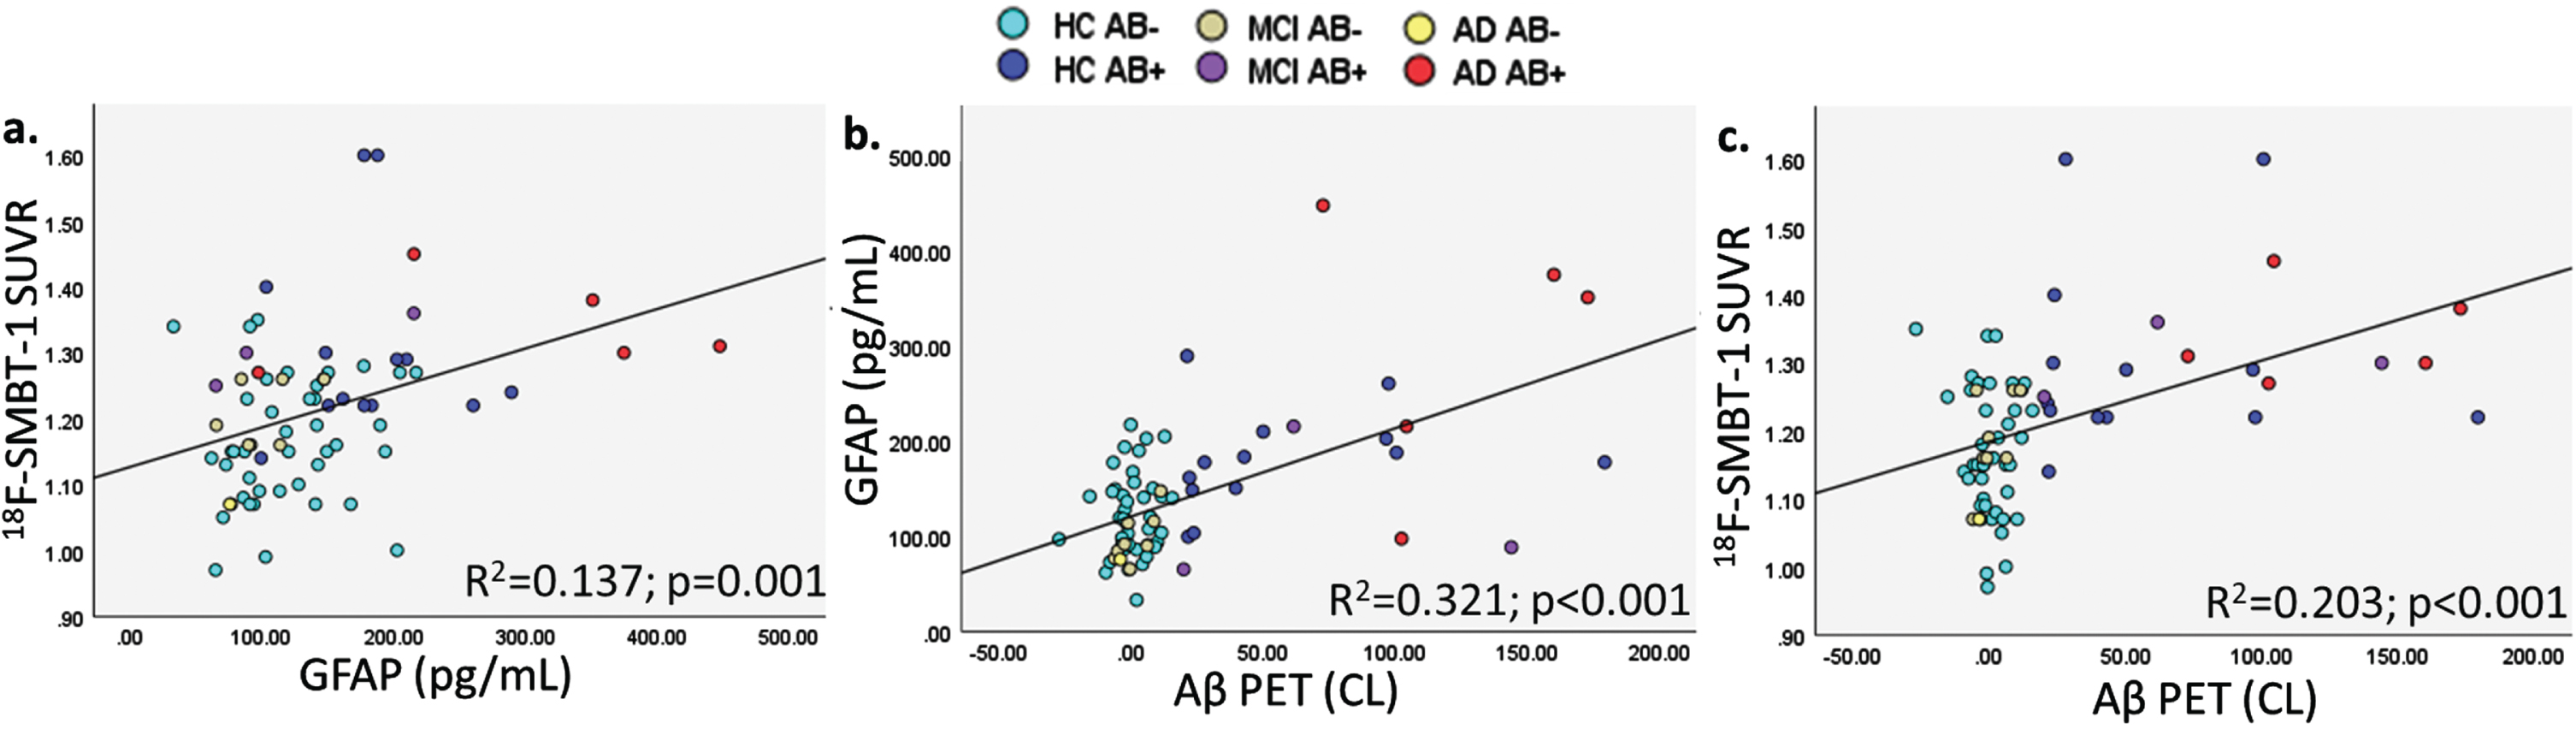 Graphical representation of correlations between (a.) plasma GFAP and 18F-SMBT-1 PET SUVR, (b.) Aβ PET and plasma GFAP, and (c.) Aβ PET and 18F-SMBT-1 PET SUVR.